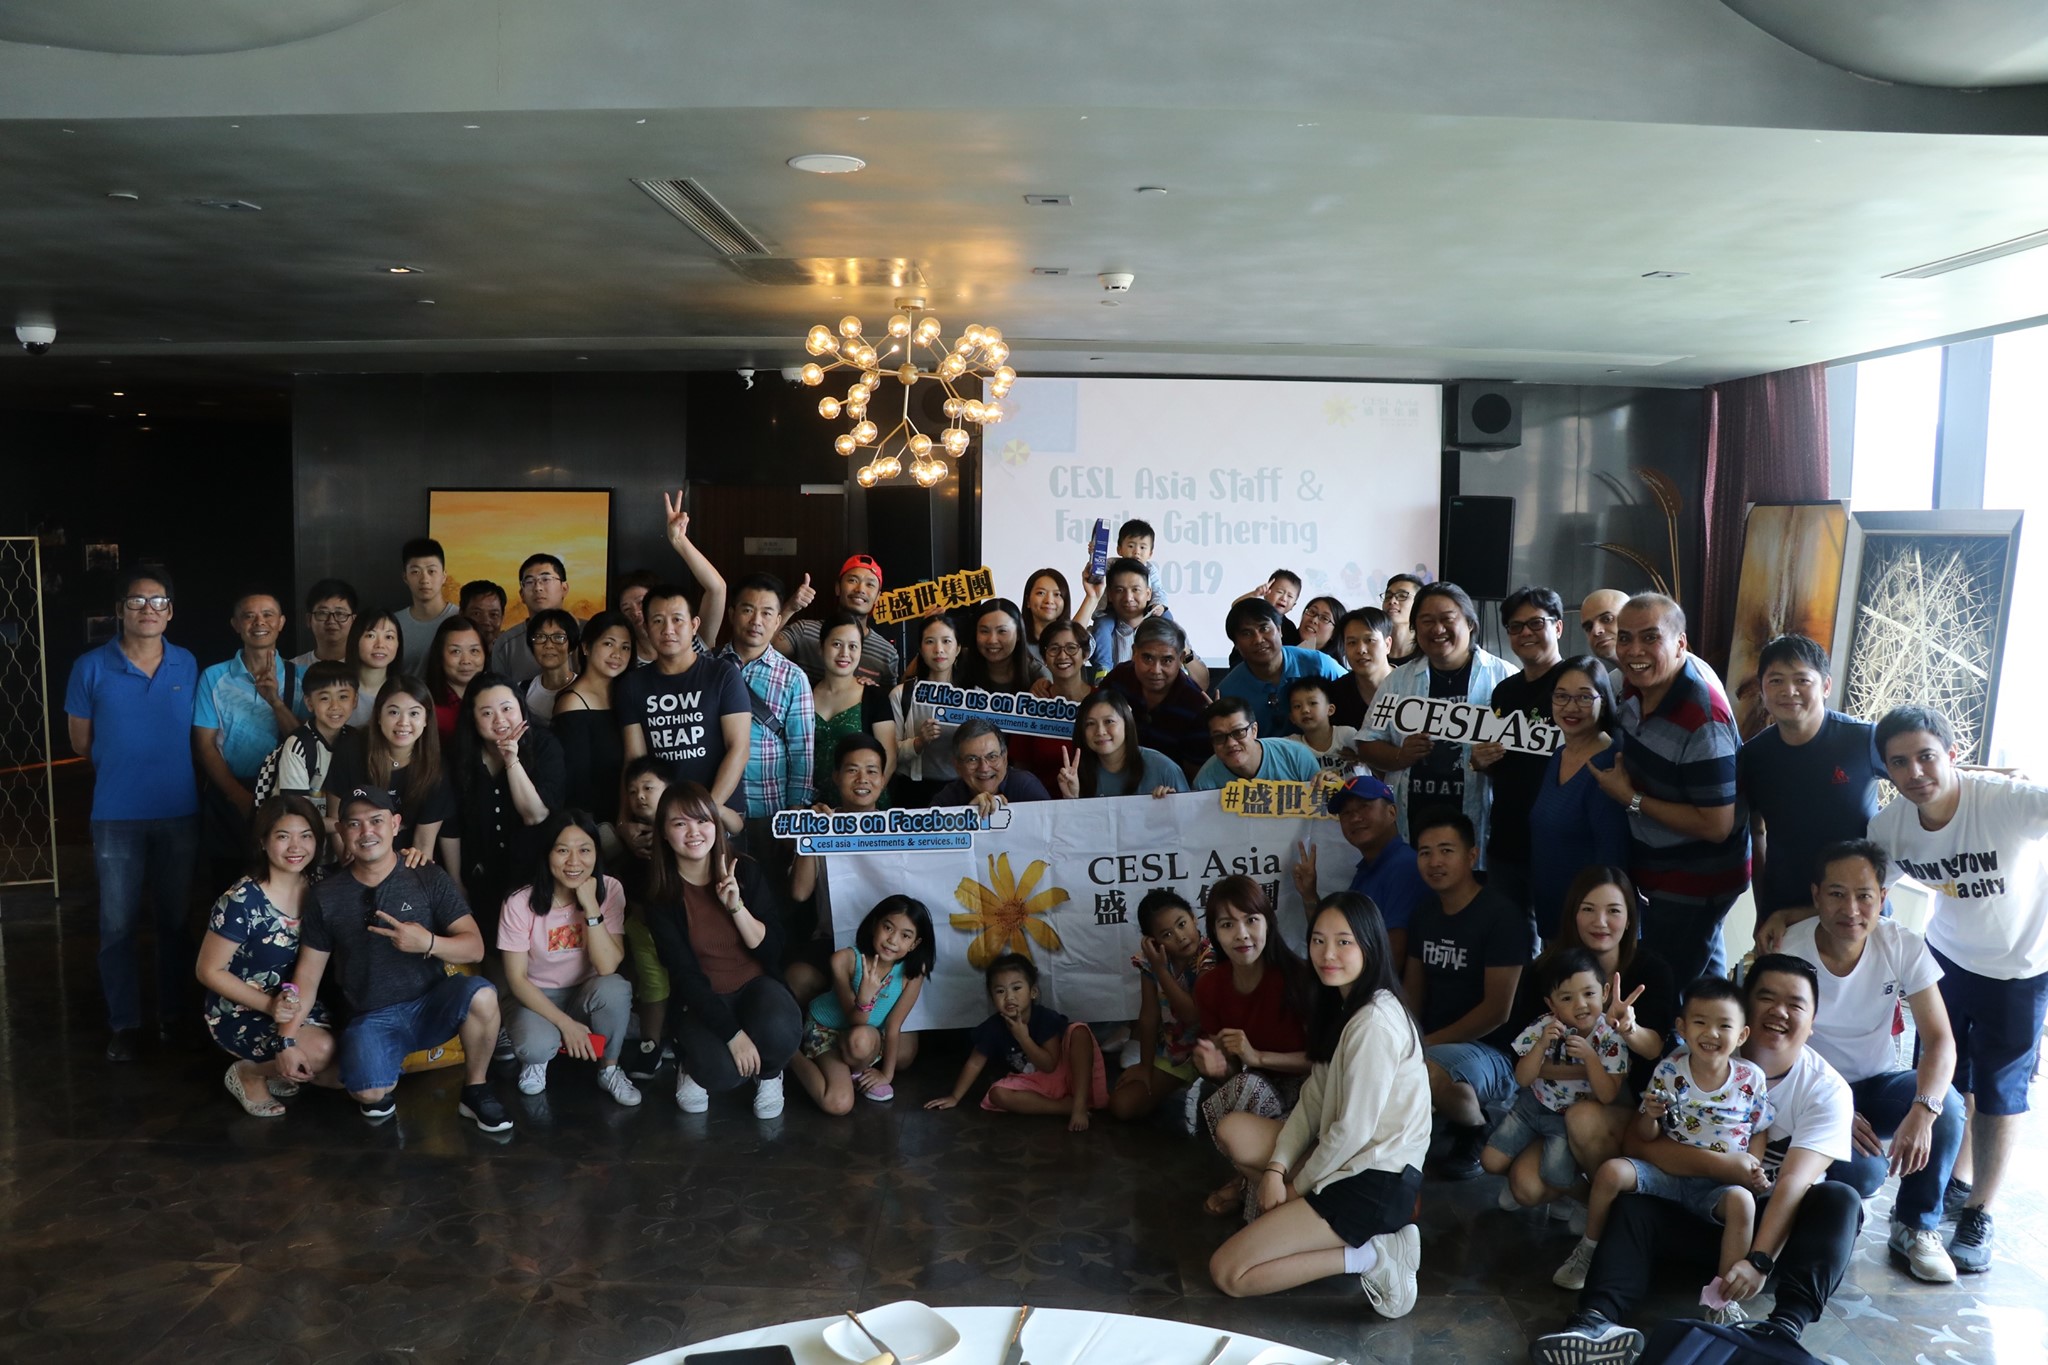 CESL Asia Staff & Family Gathering 2019 (2019/9/21-22)